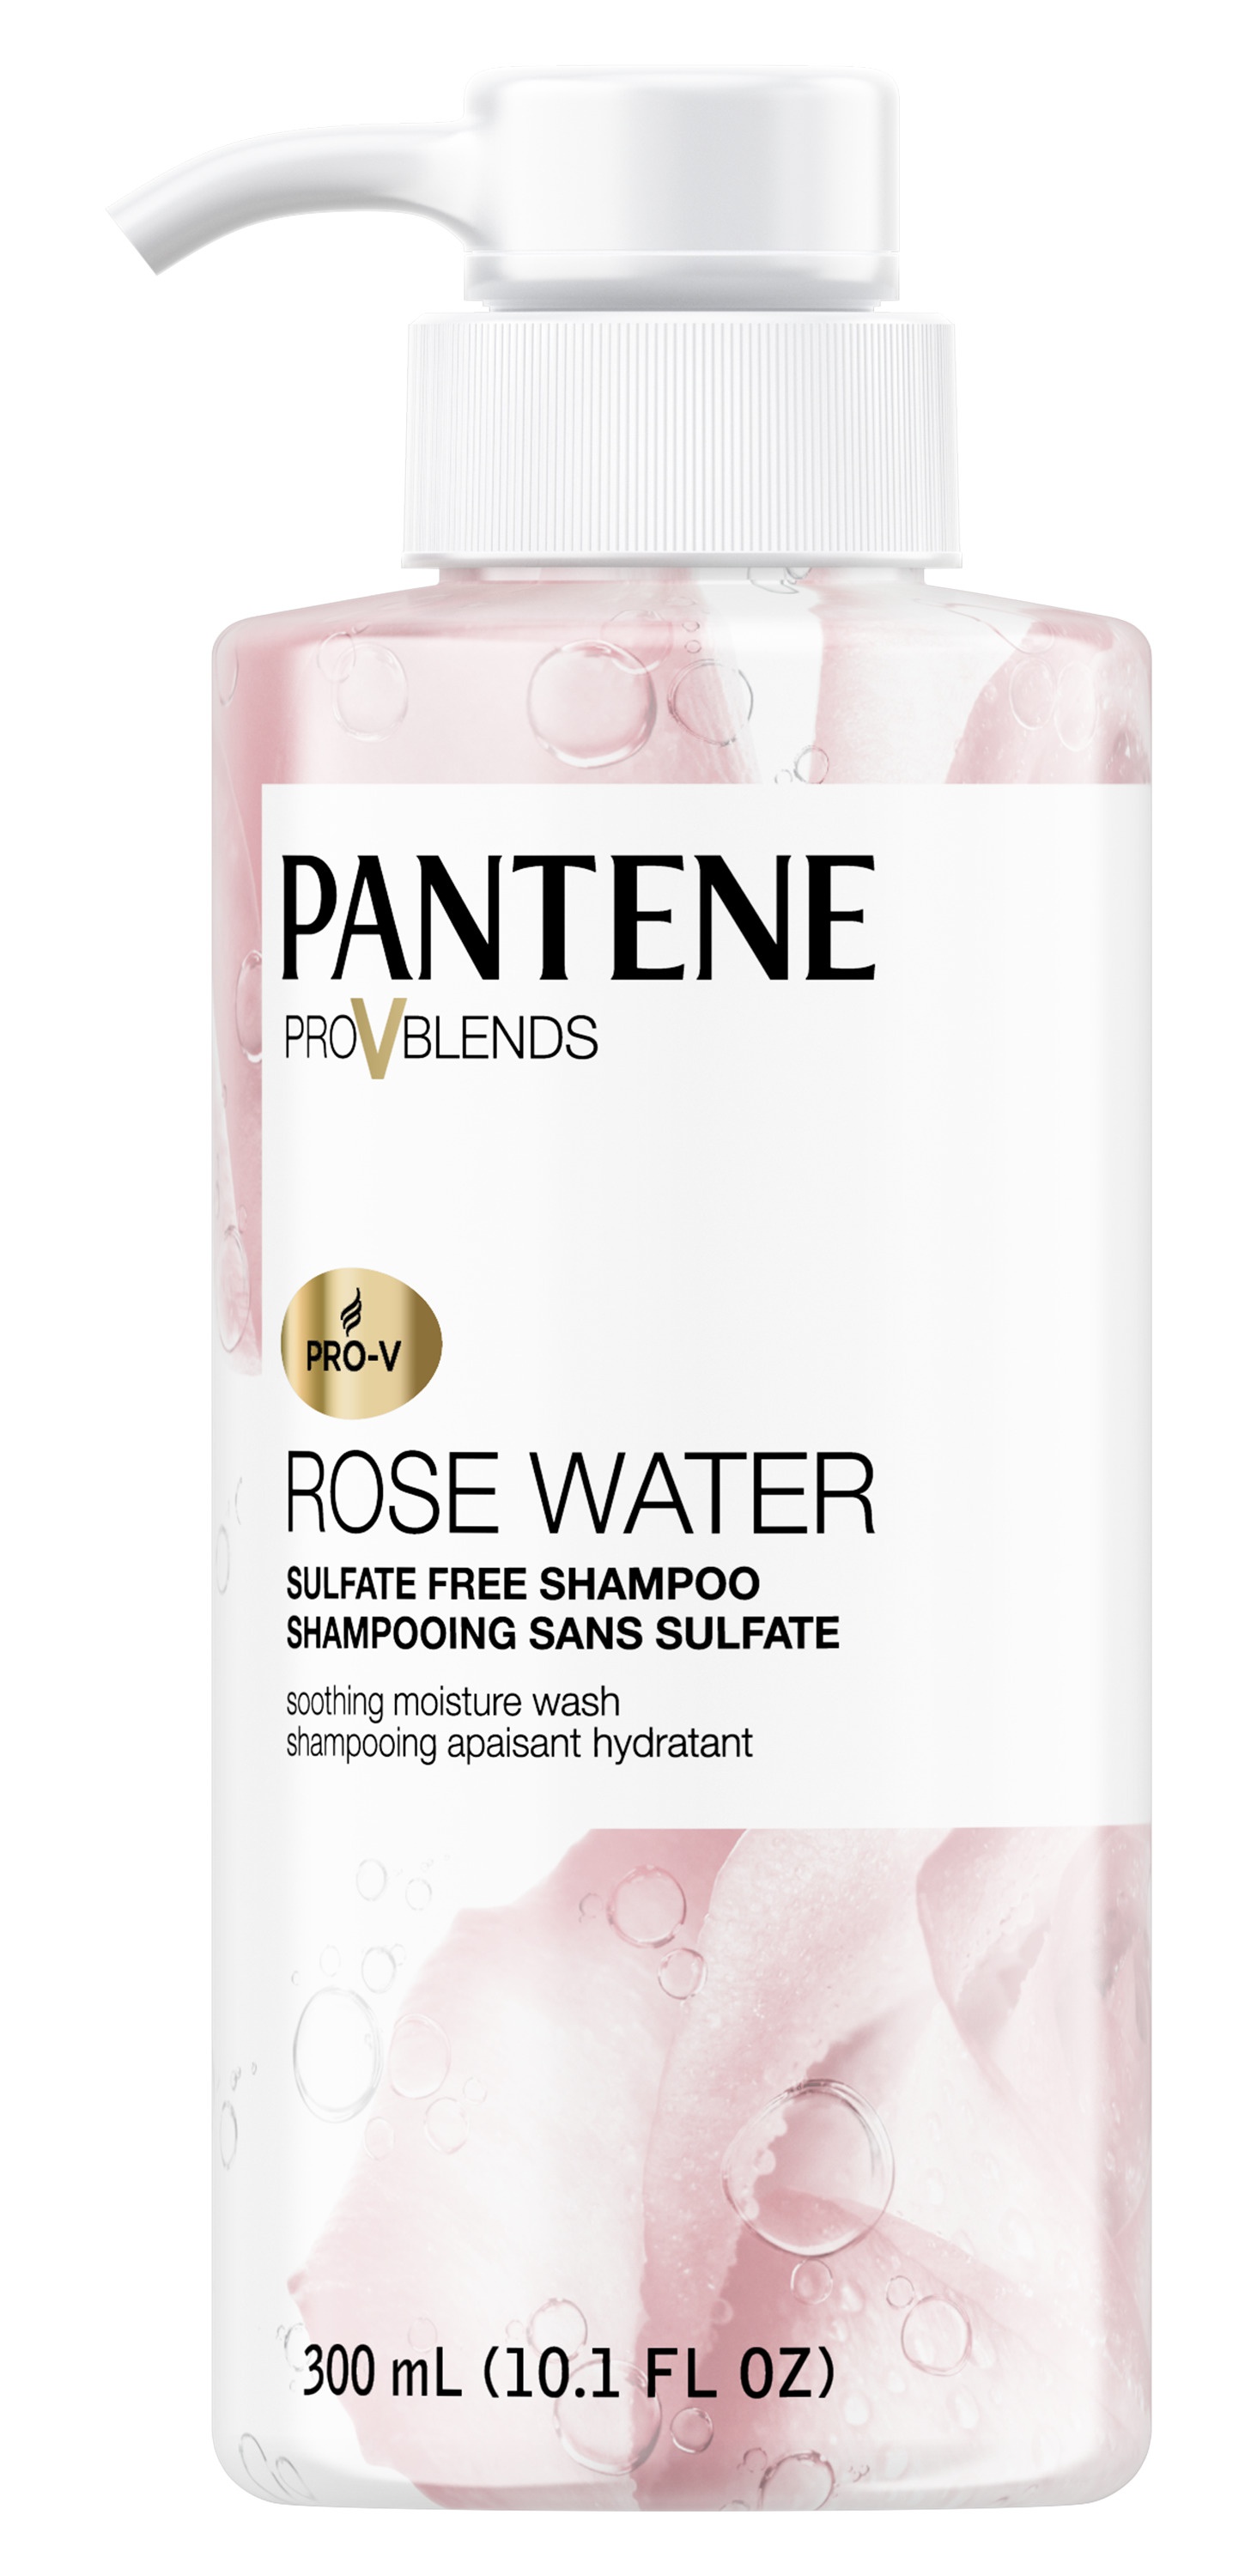 Pantene Pro V Blends Rose Water Shampoo